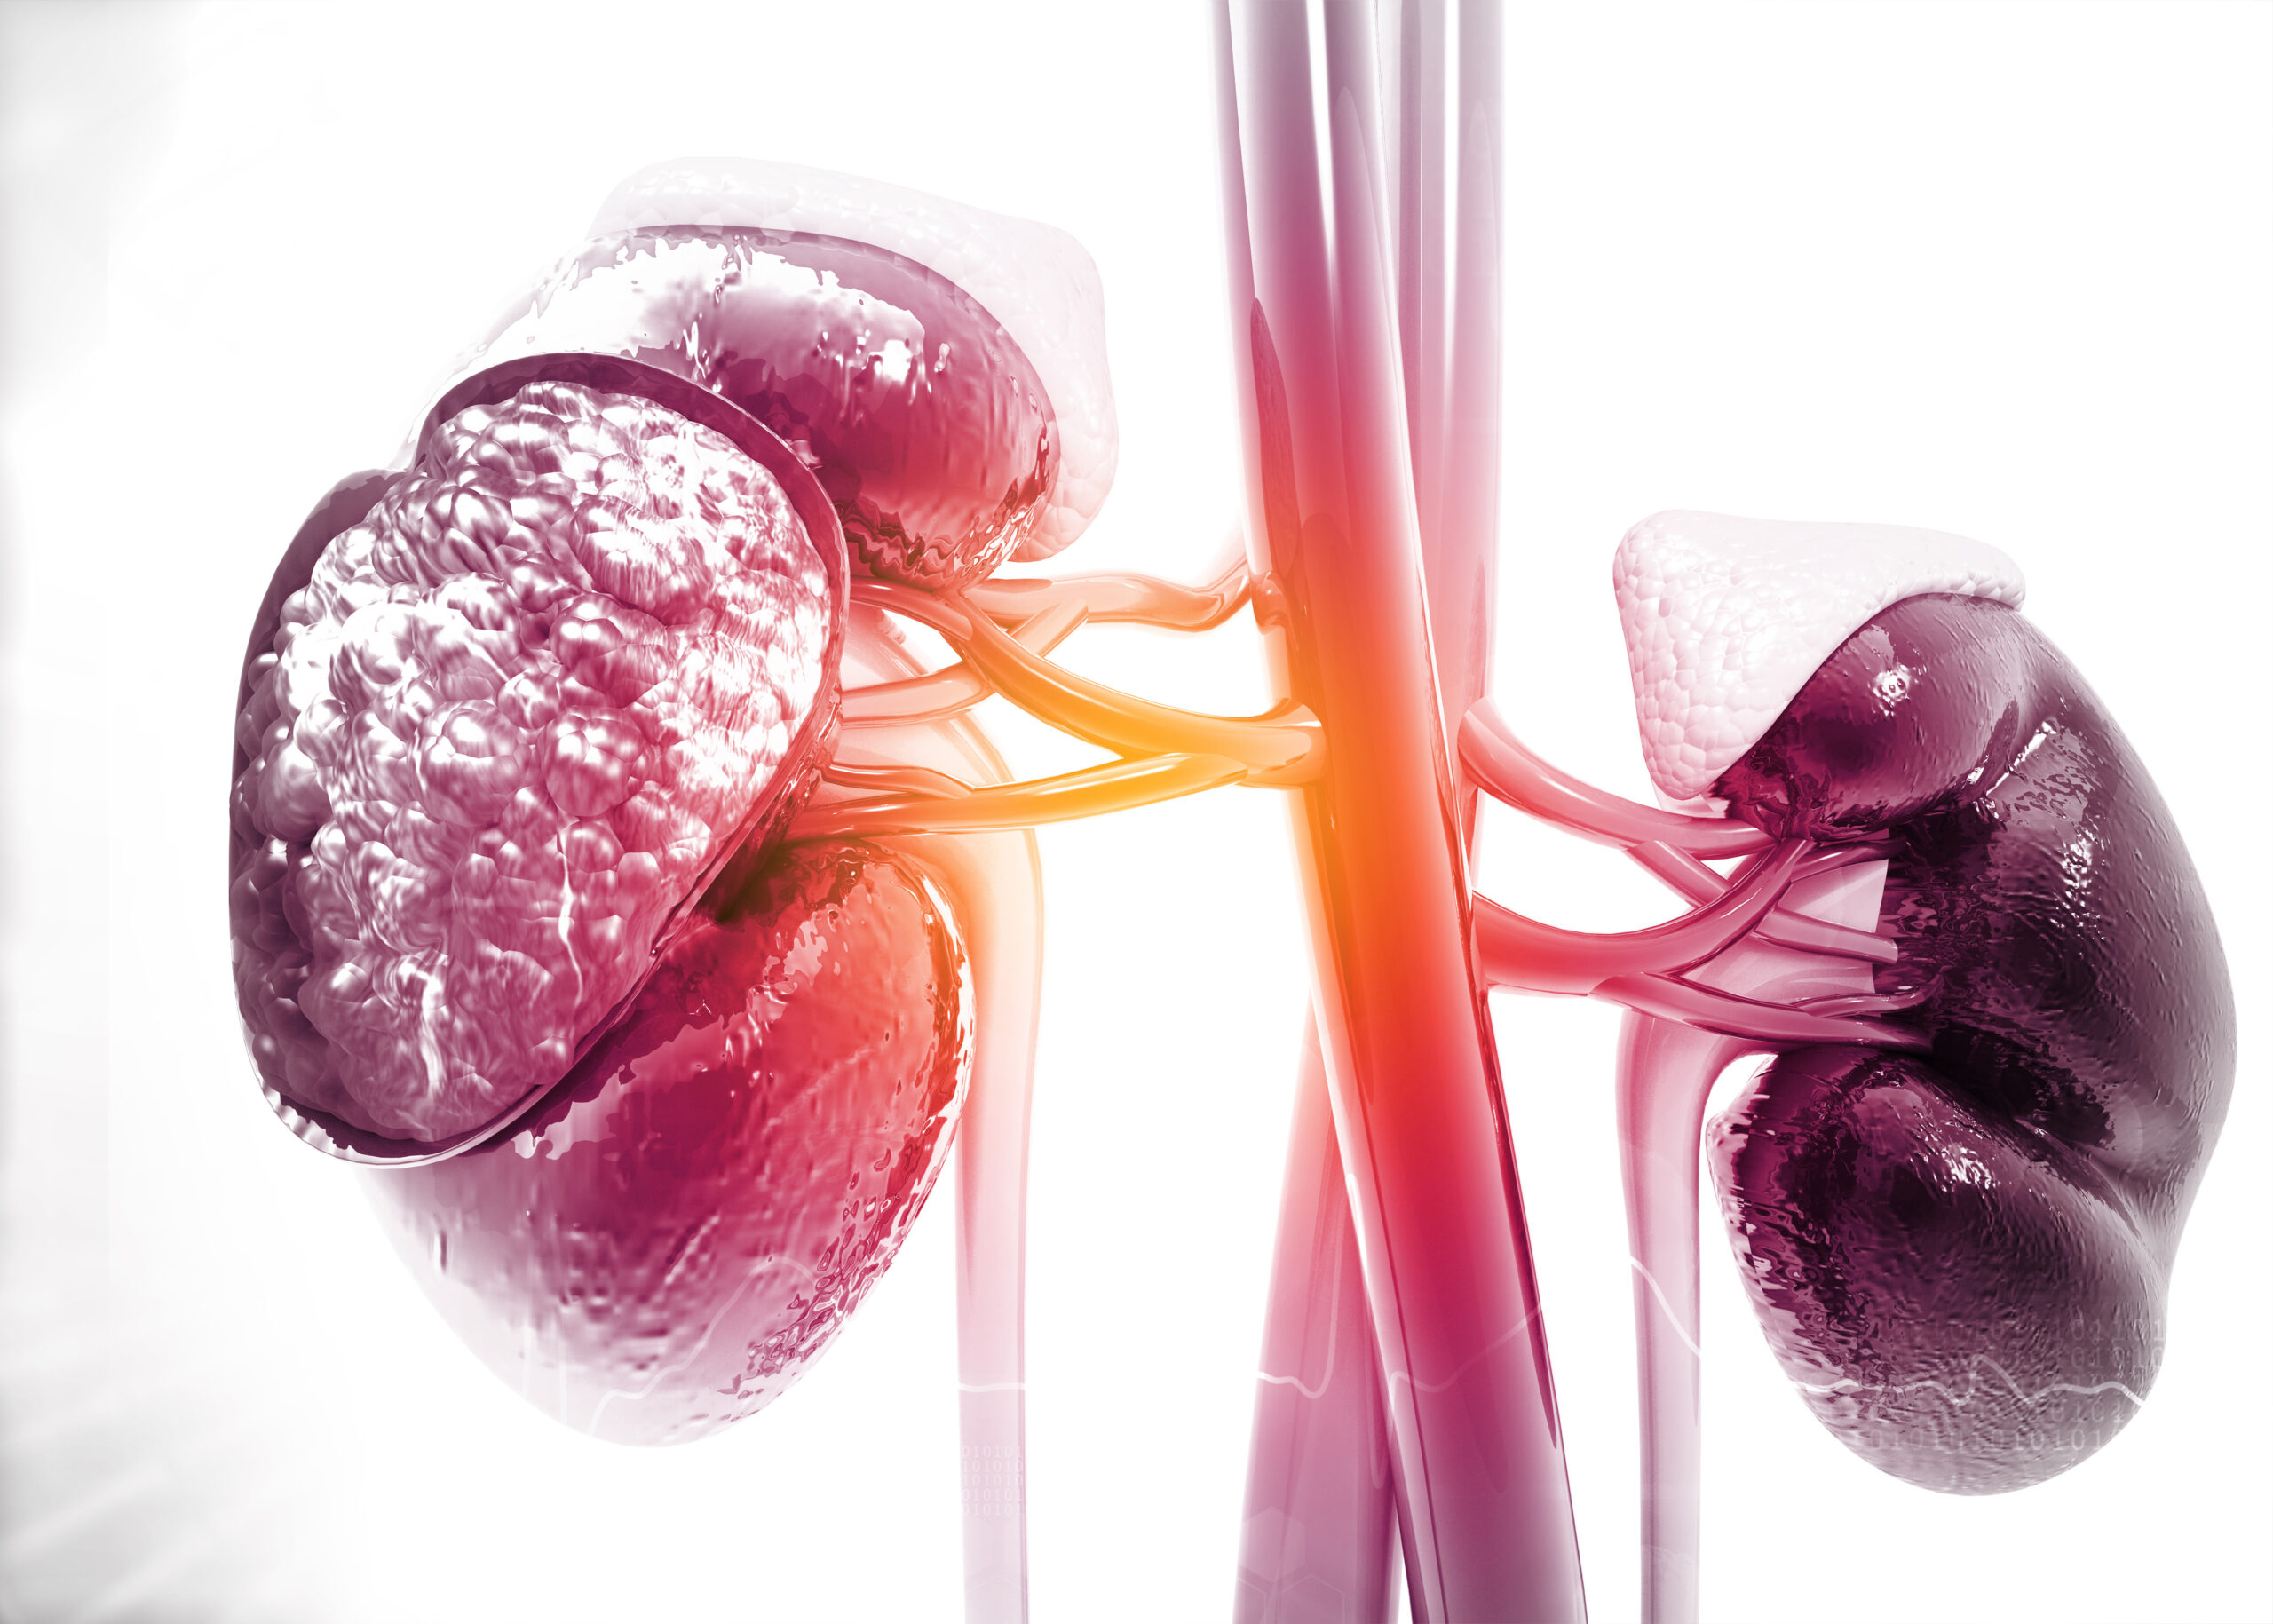 Diseased human kidney on science background